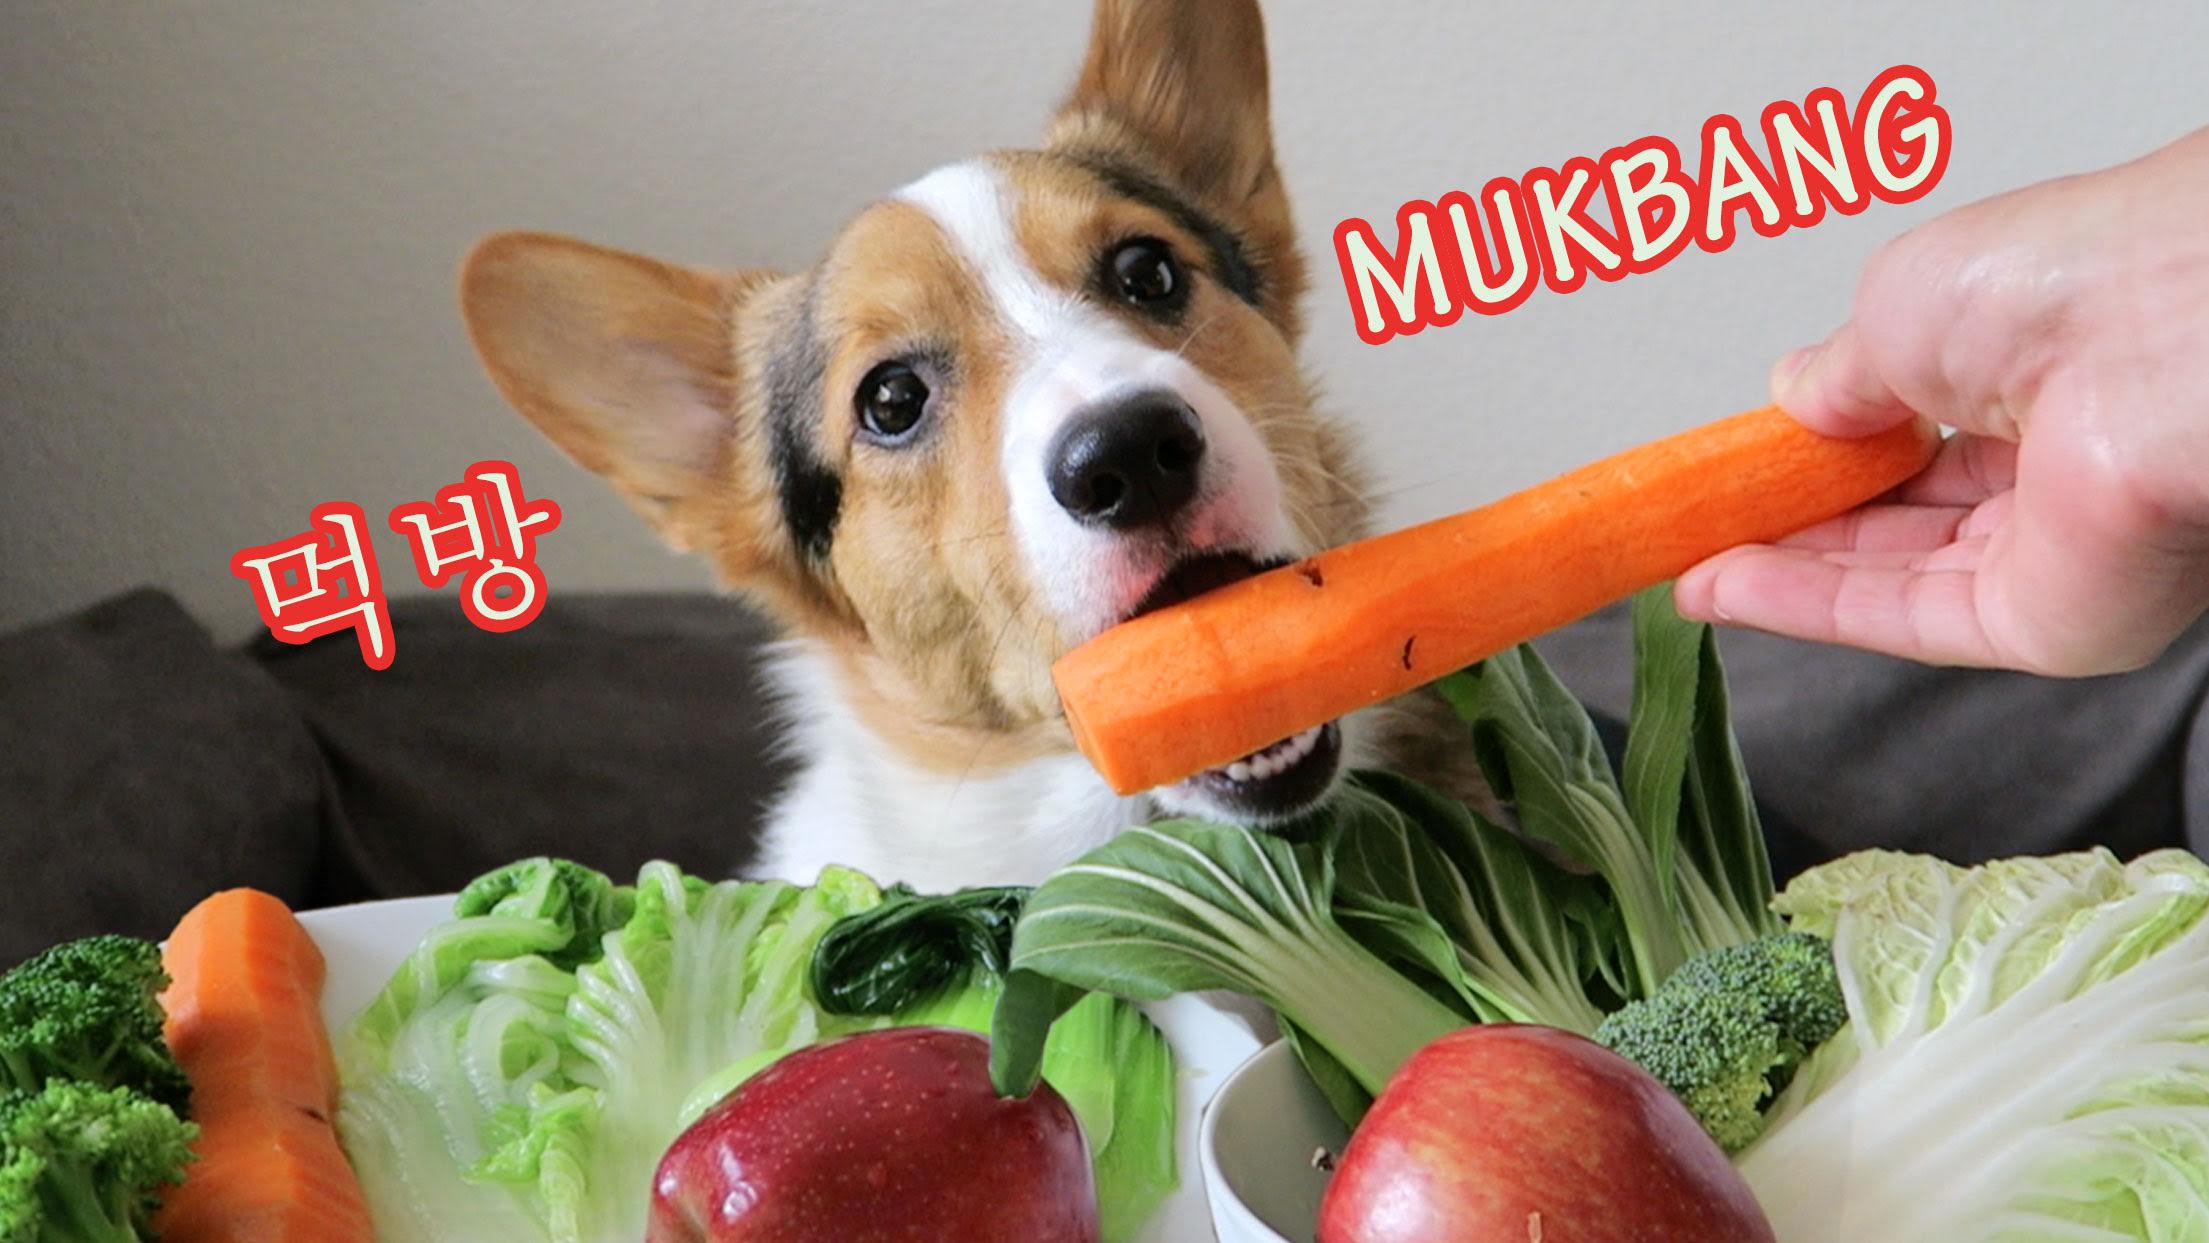 CORGI DOG ANNIHILATES VEGETABLES | MUKBANG EATING SHOW